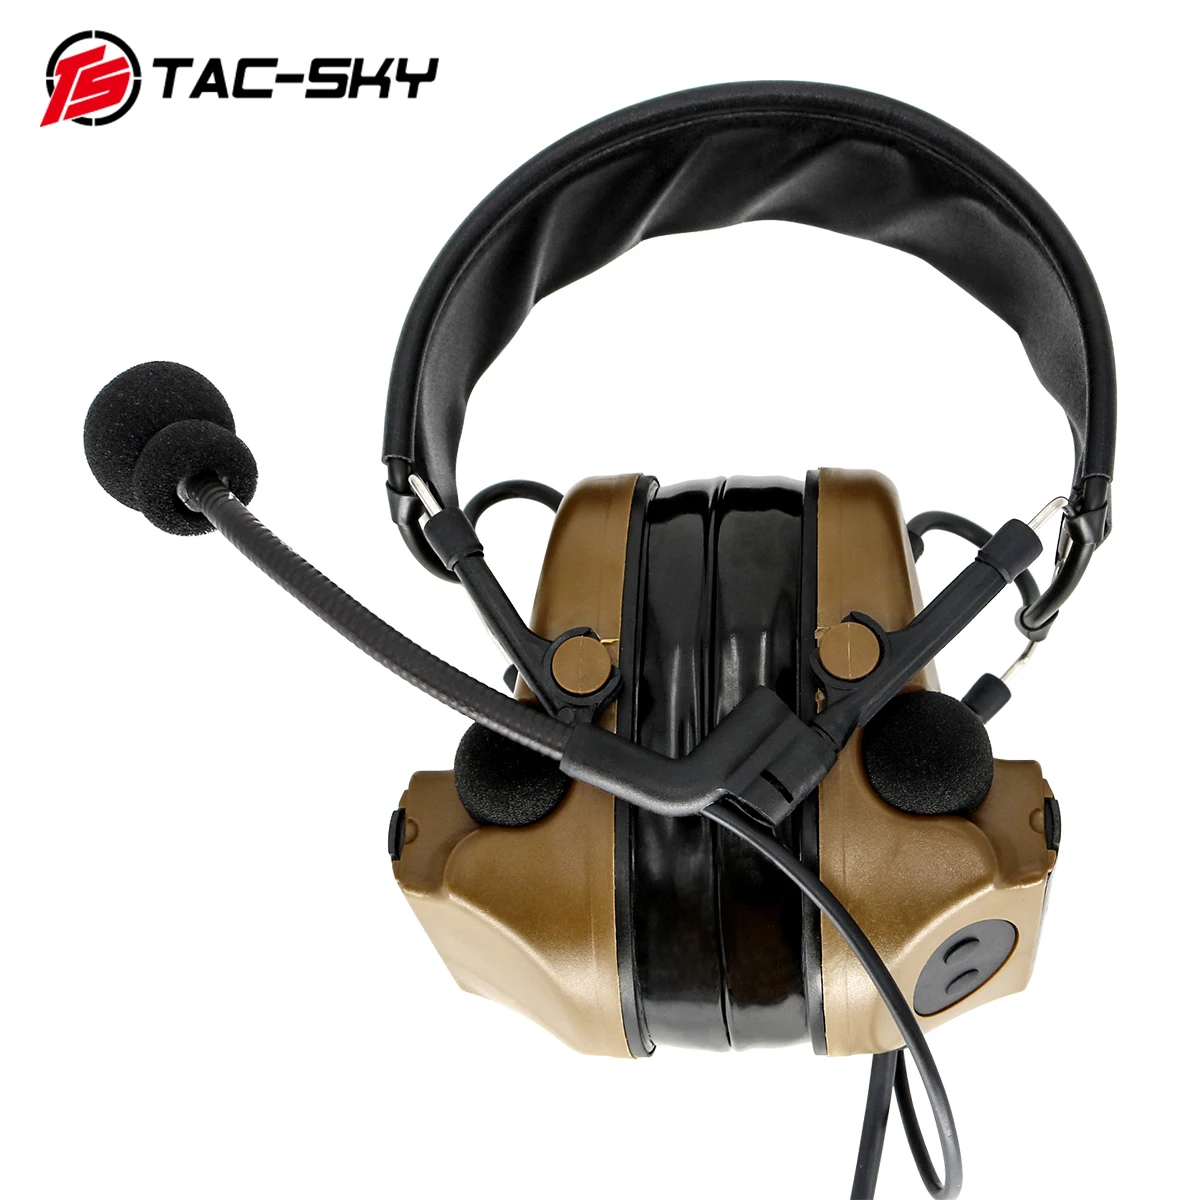 COMTAC TAC-SKY comtac ii silicone earmuffs tactical comtac noise reduction pickup military tactical headphones comtac ii